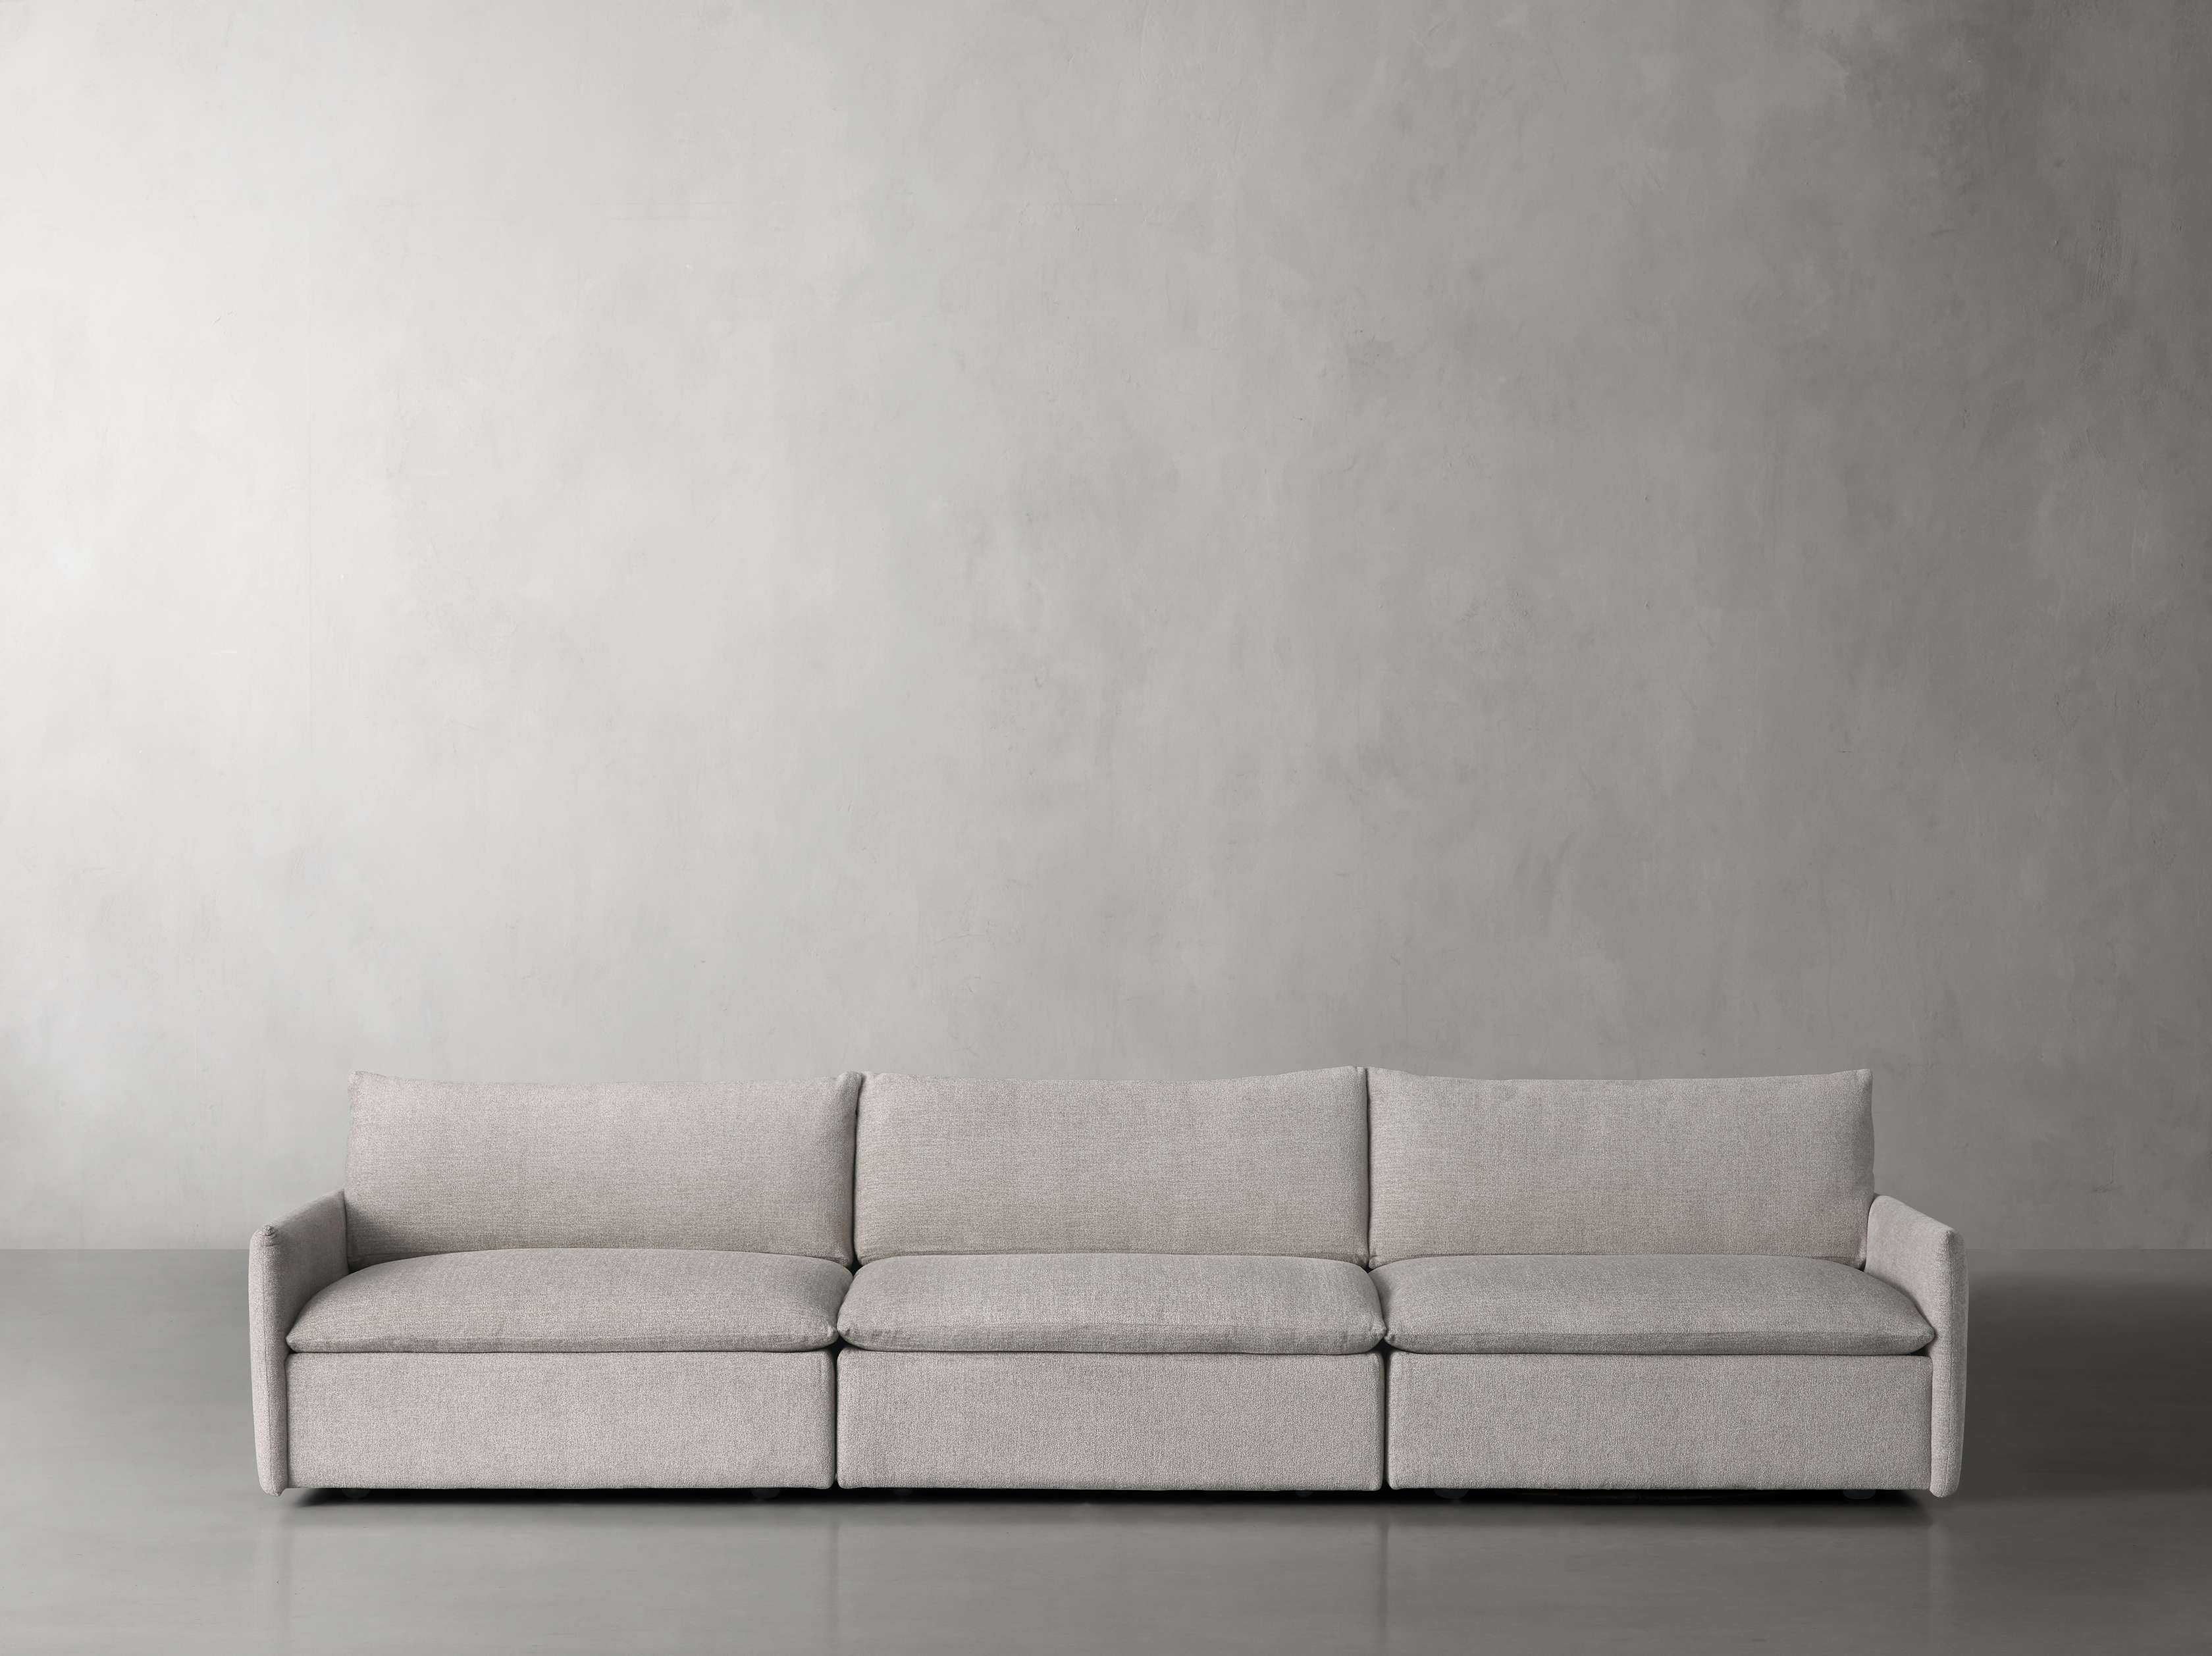 Two – Sofa Bergen Modular Arhaus Piece